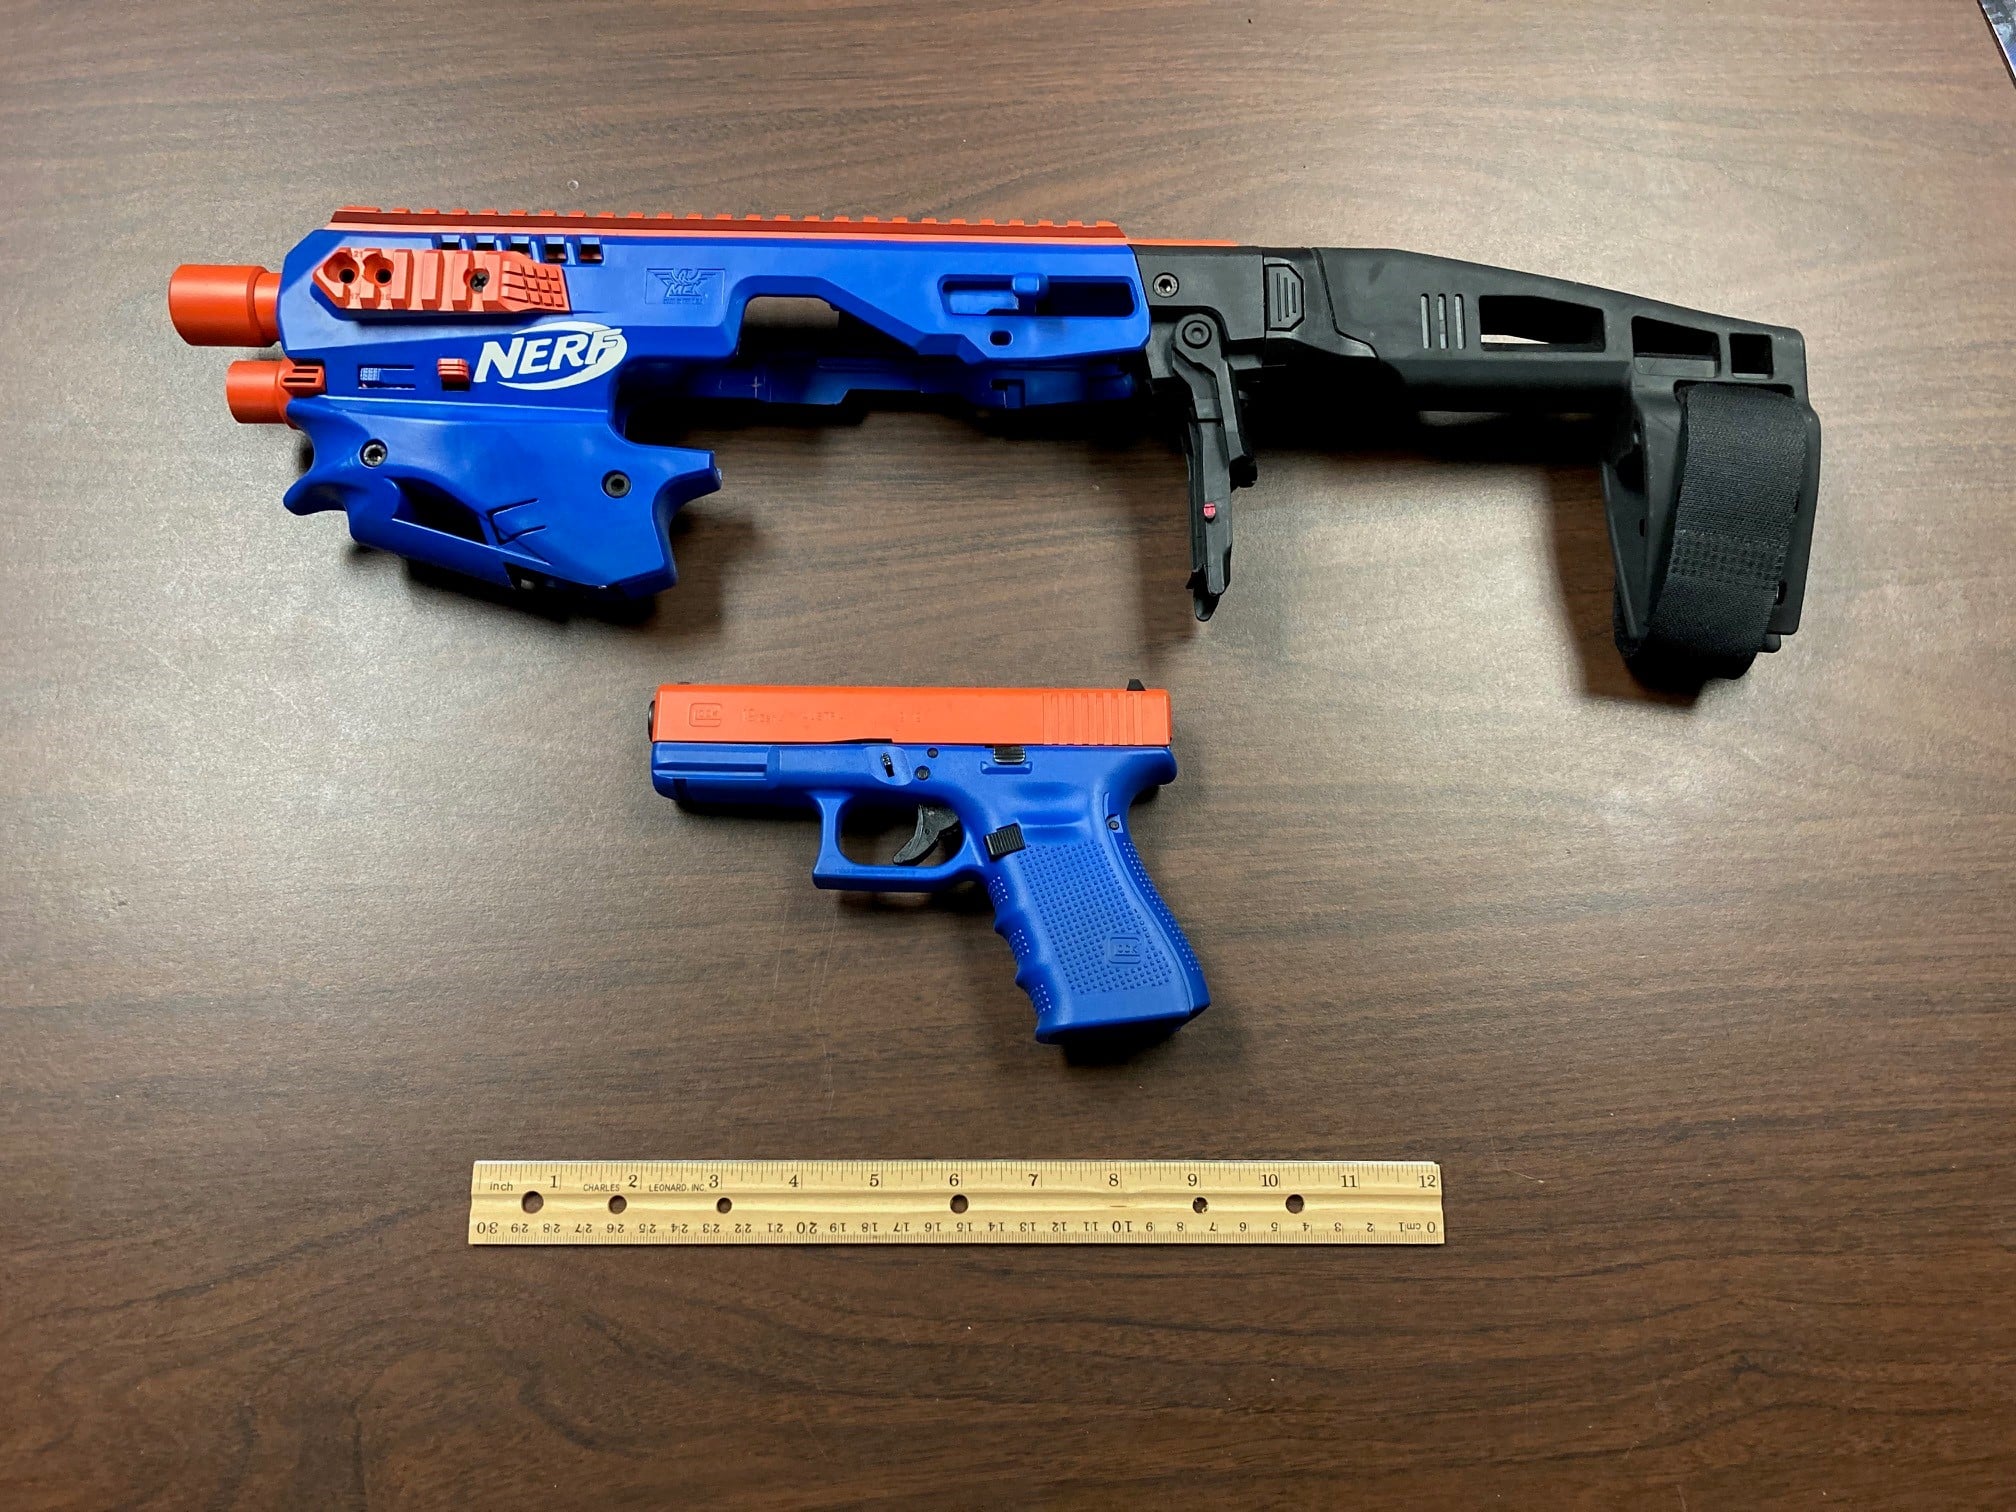 Nerf Gun: Glock Pistol Disguised As Toy Seized In North Carolina Raid ...